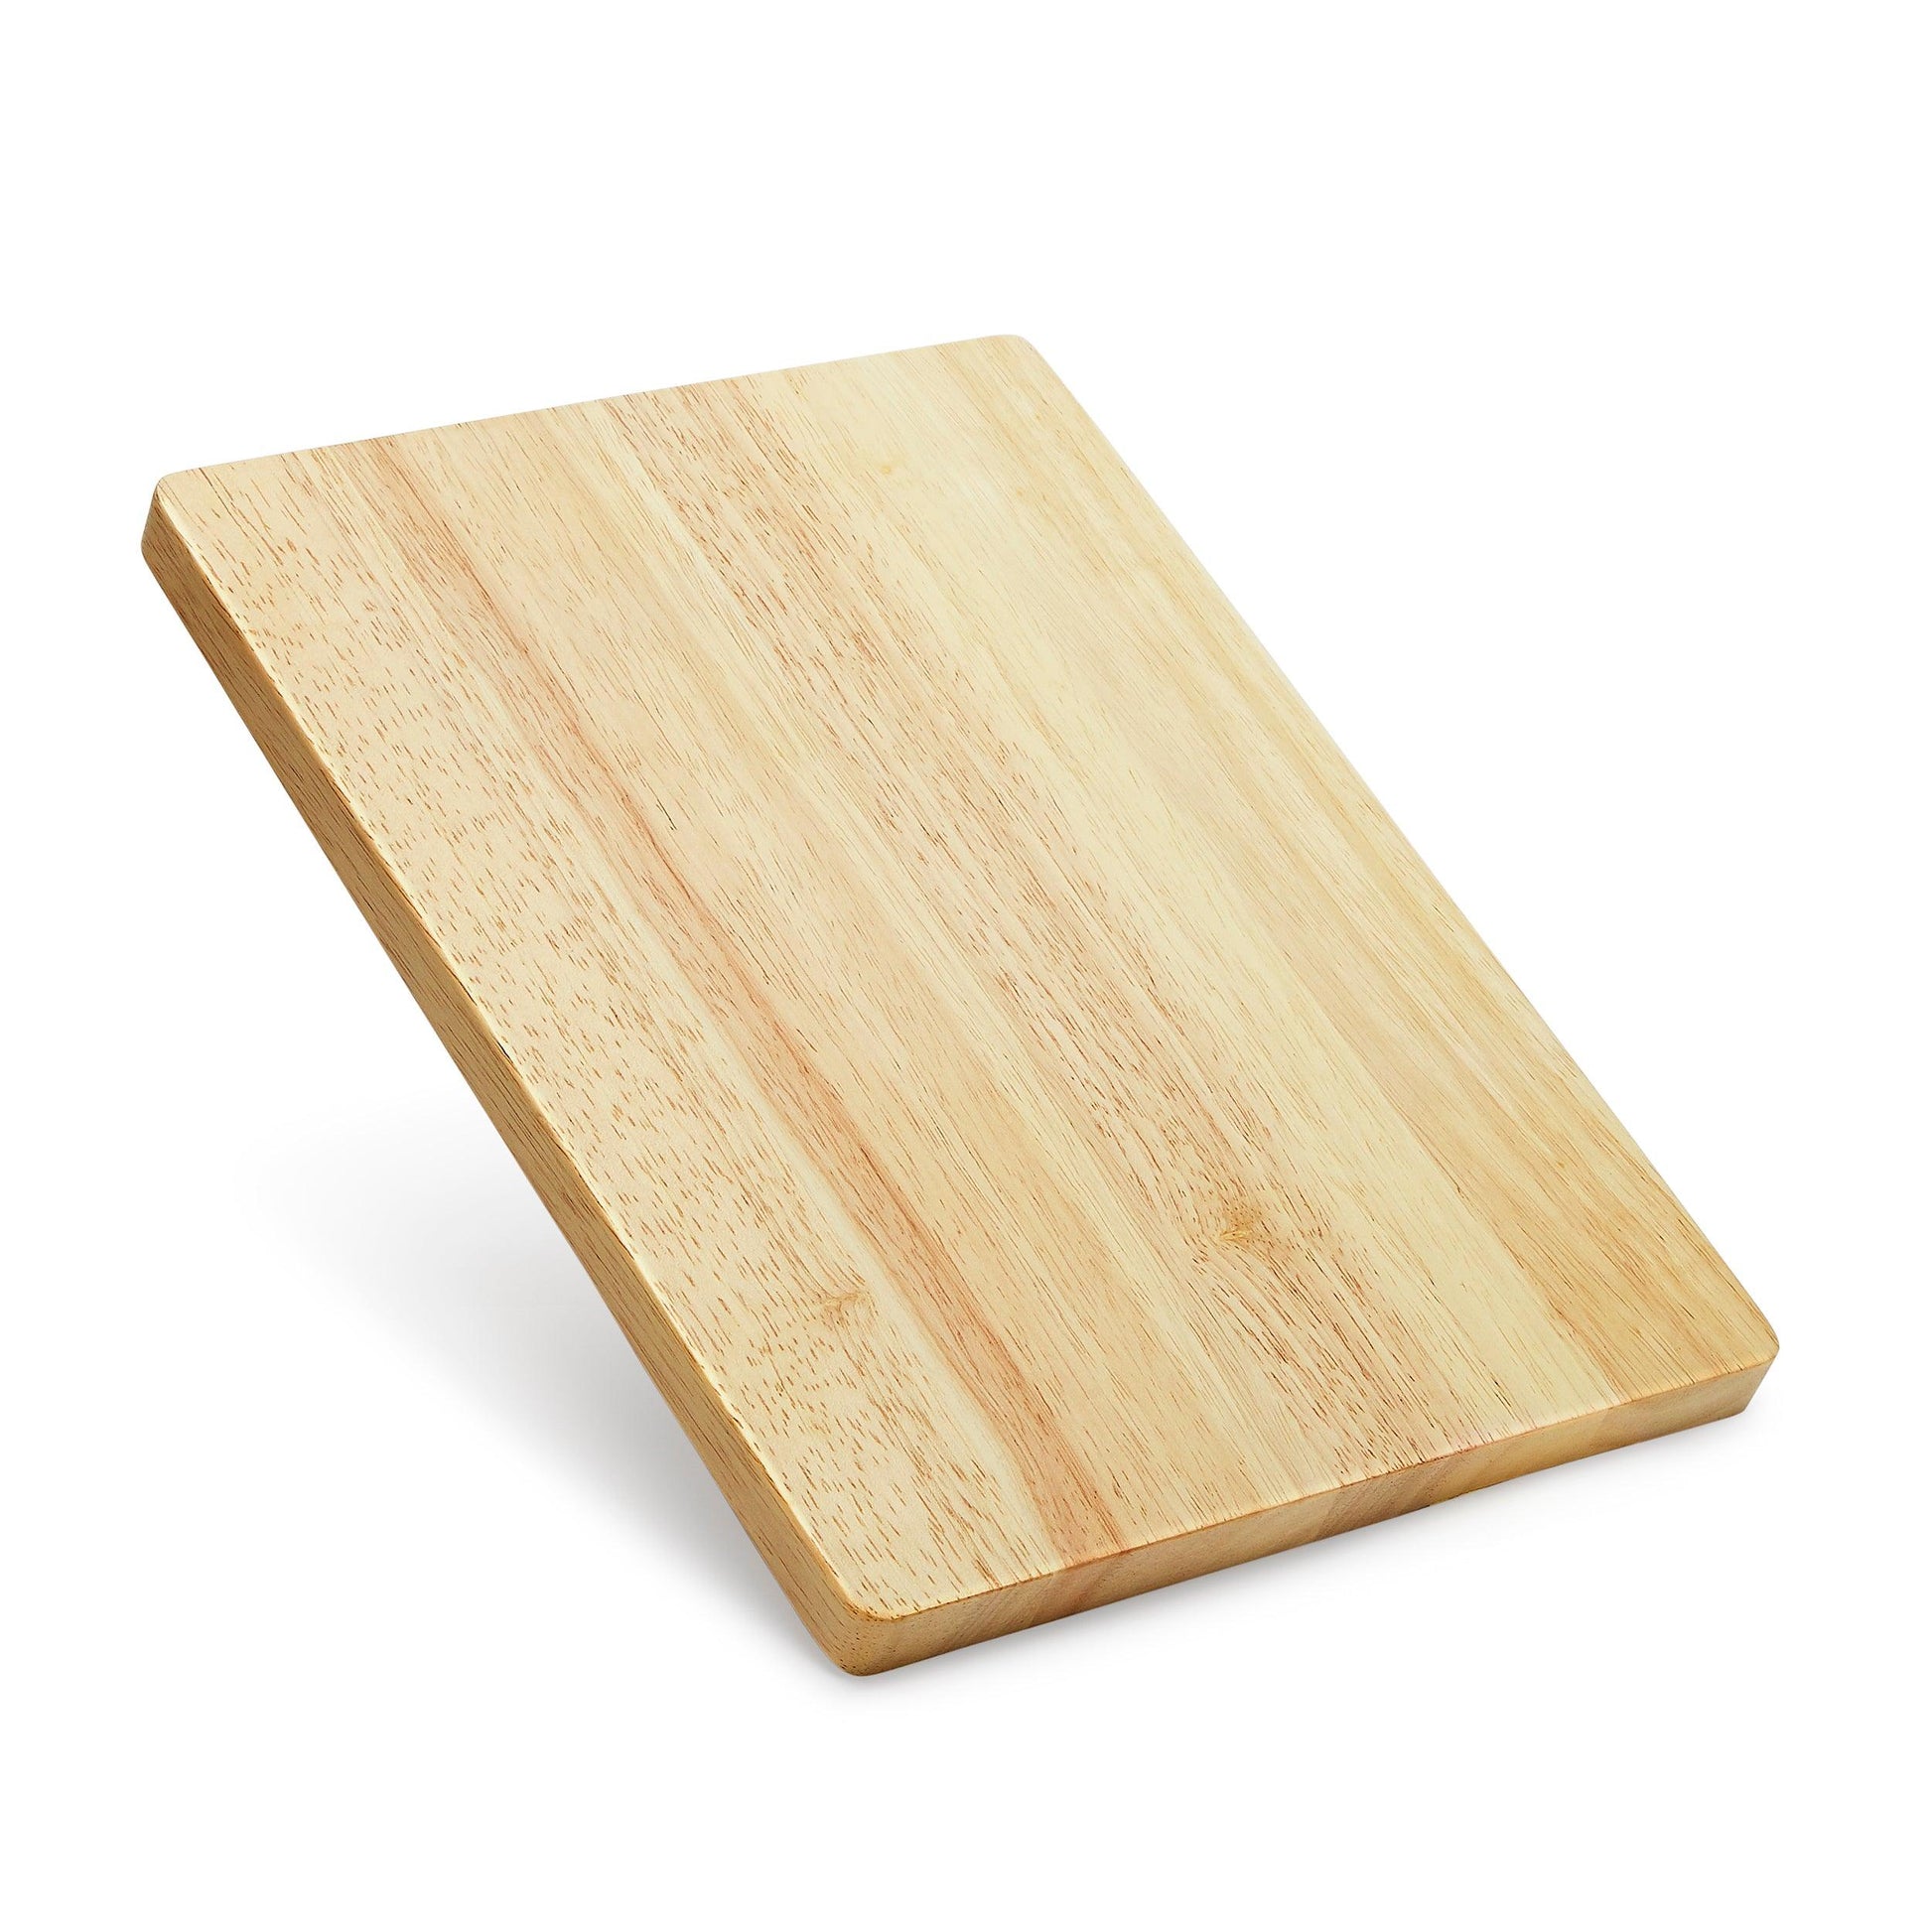 starstar hardwood, heavy duty rubber wood cutting board, wooden cutting  board for kitchen (9.7/8-16.7/8)